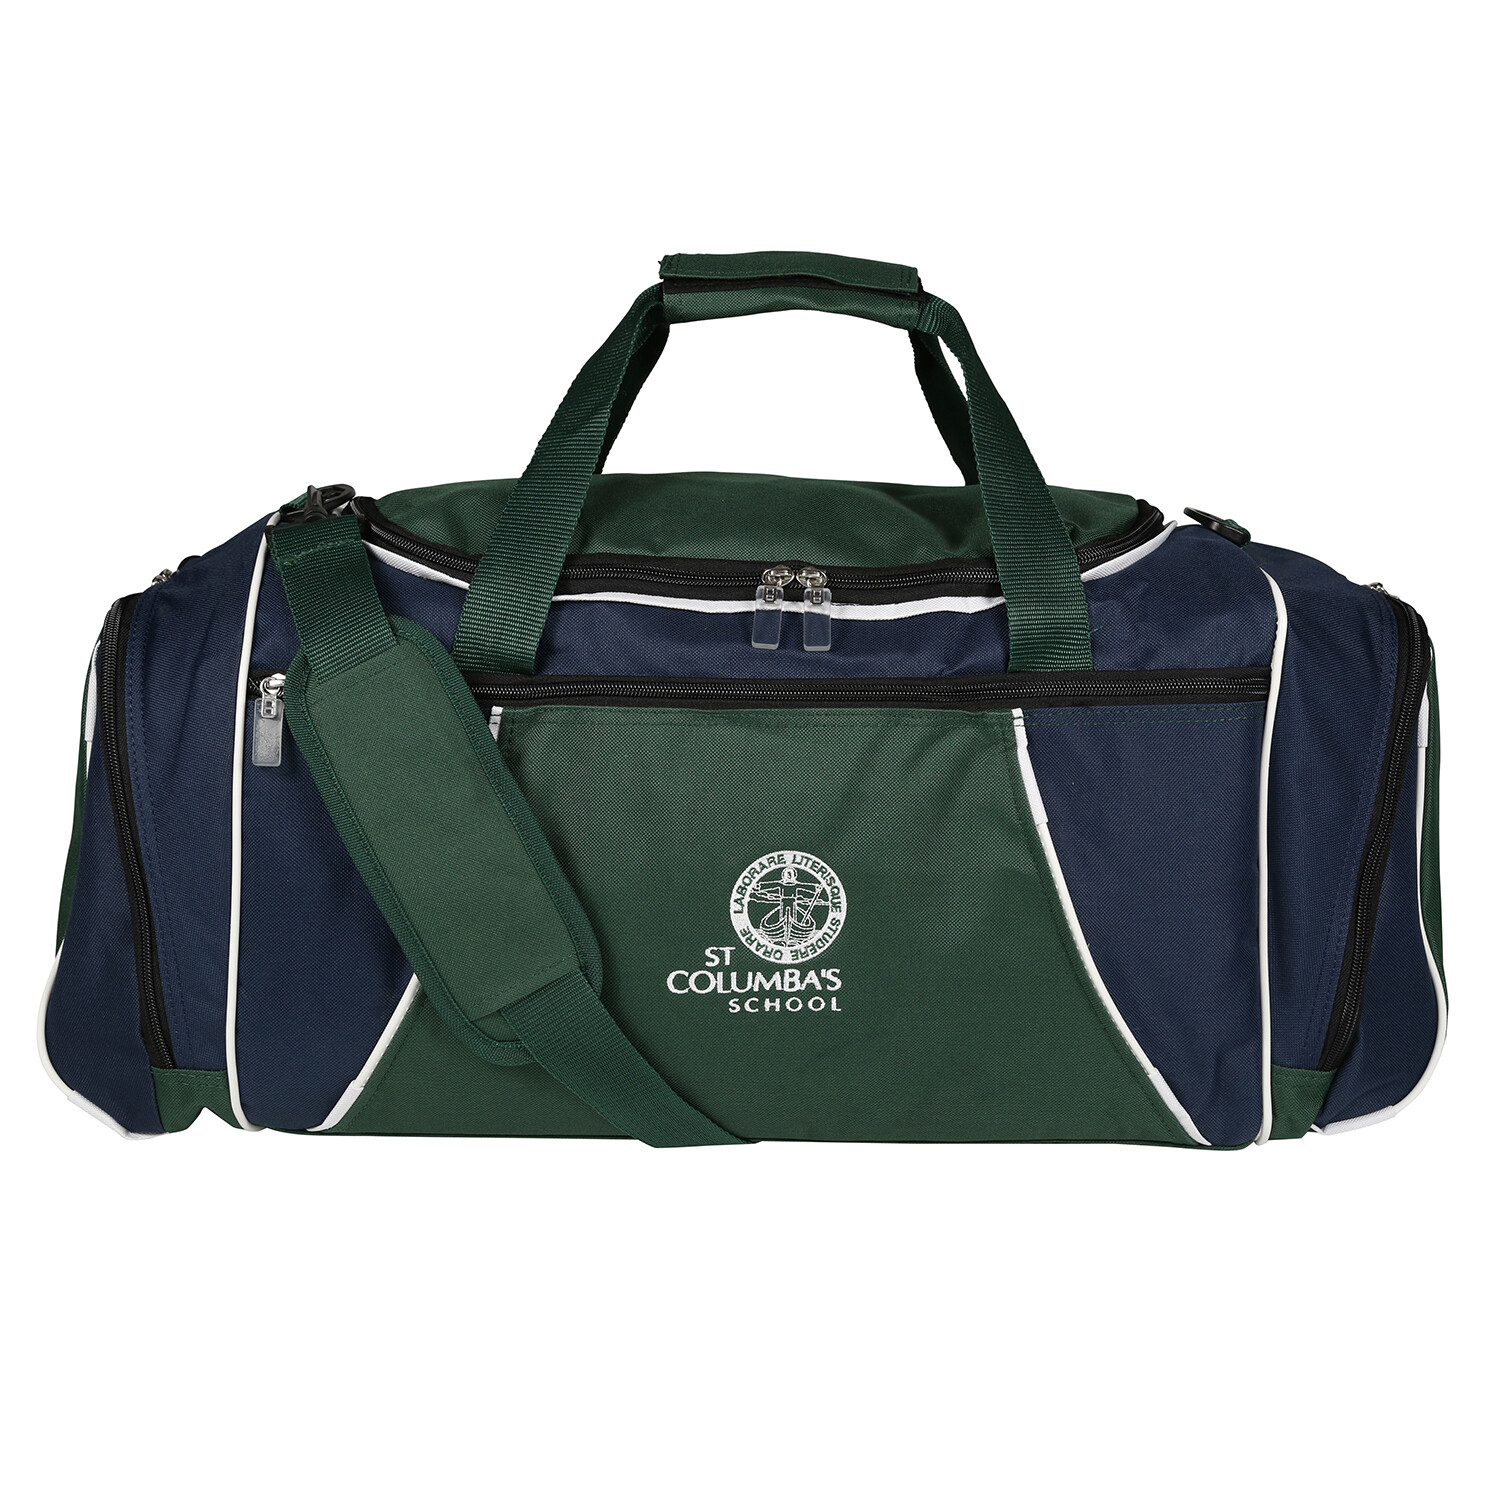 St Columba's School 'Medium' PE Kit Bag